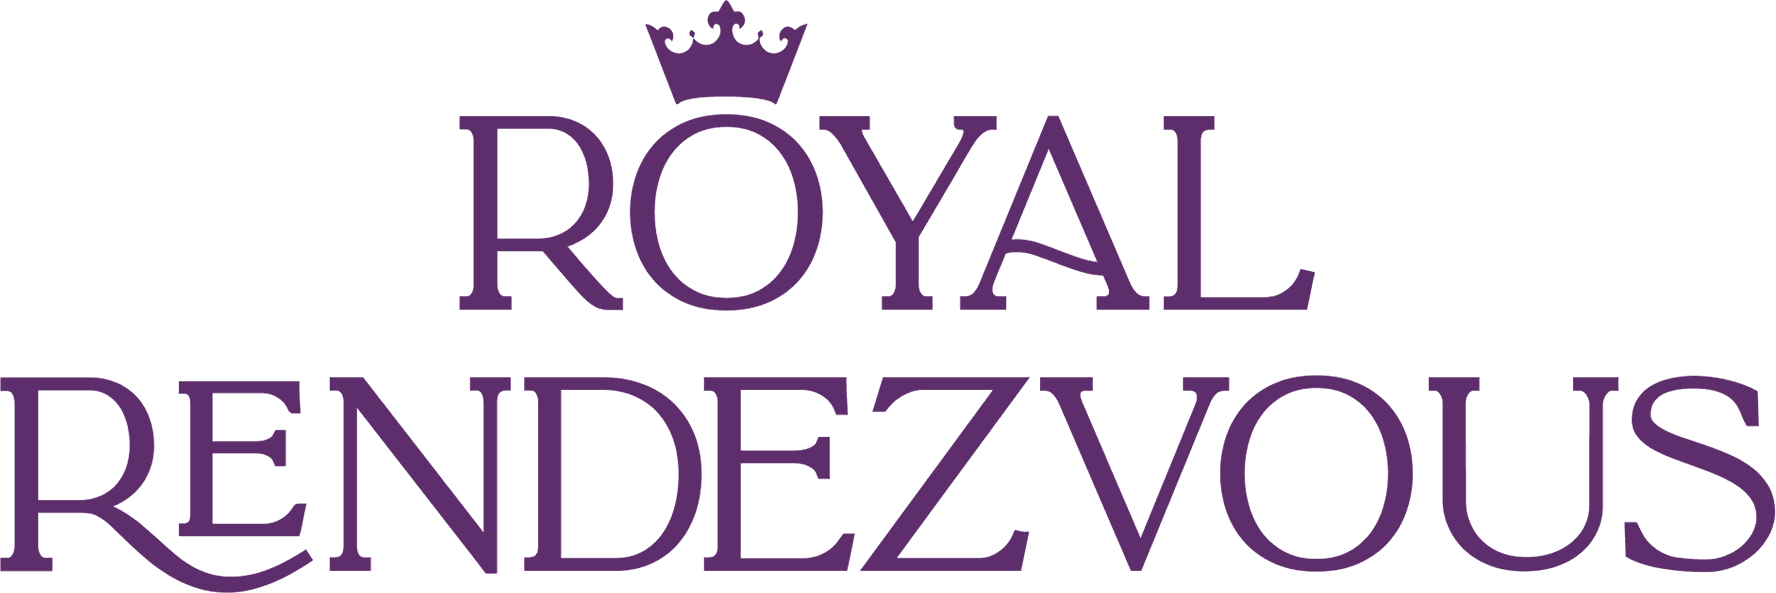 Royal Rendezvous logo